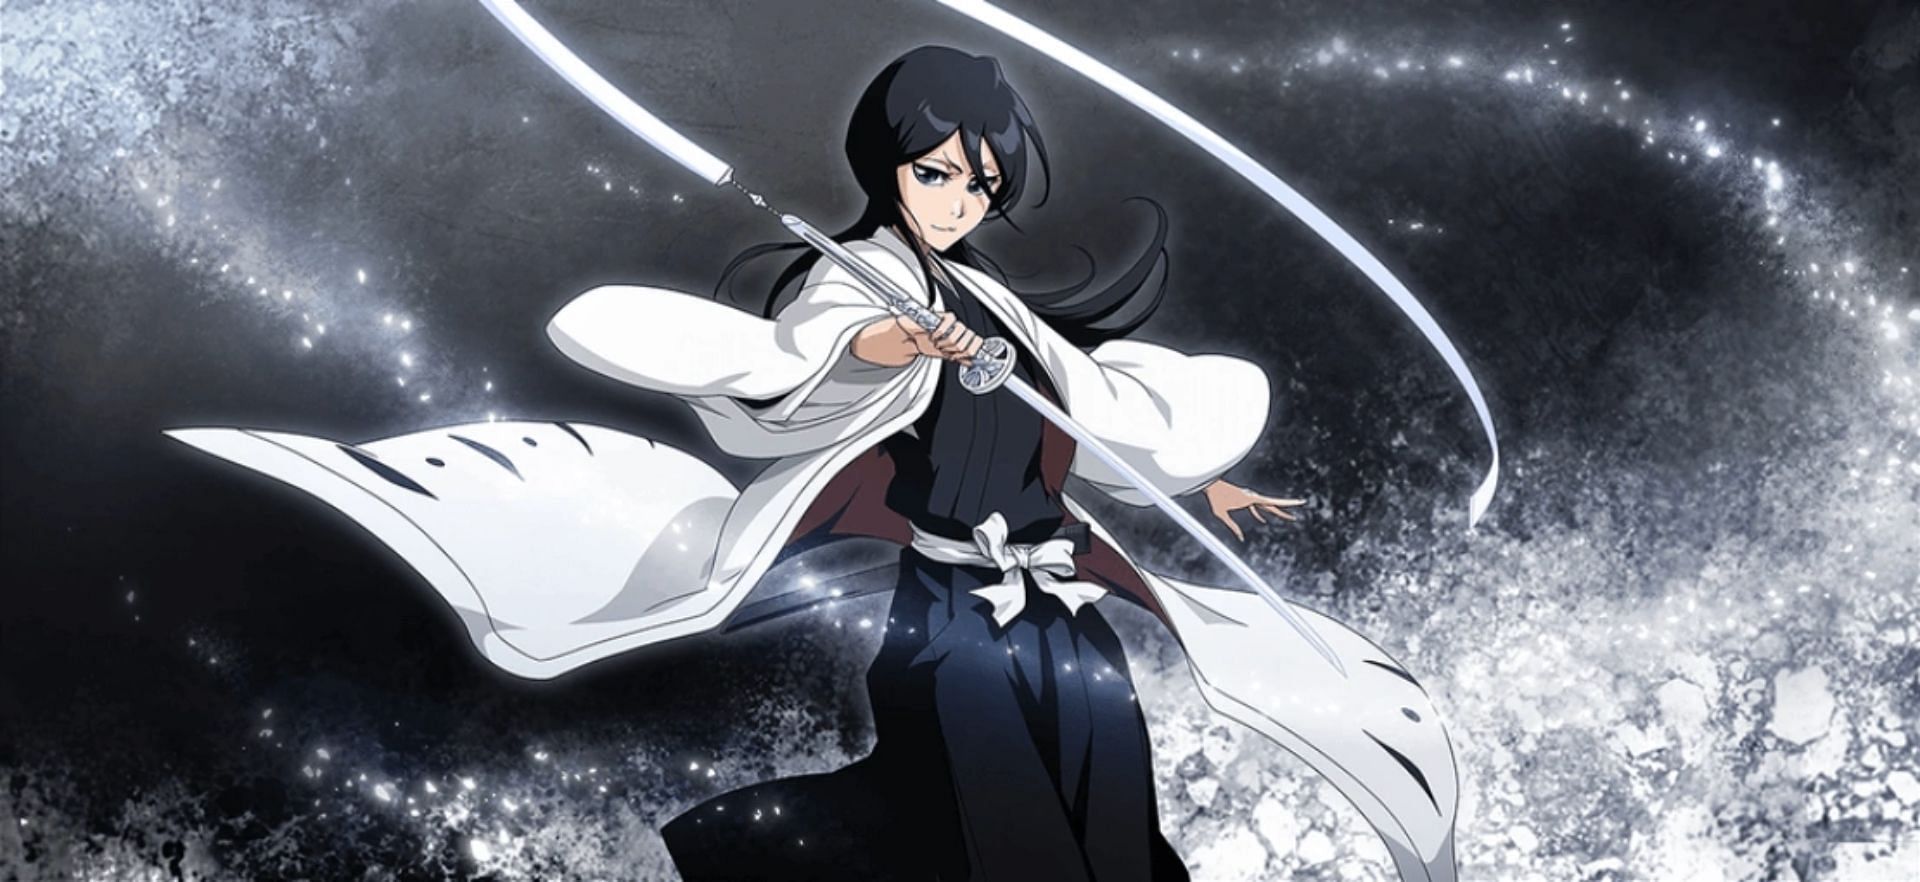 BLEACH: Thousand-Year Blood War Episode 19 Preview Shows Rukia